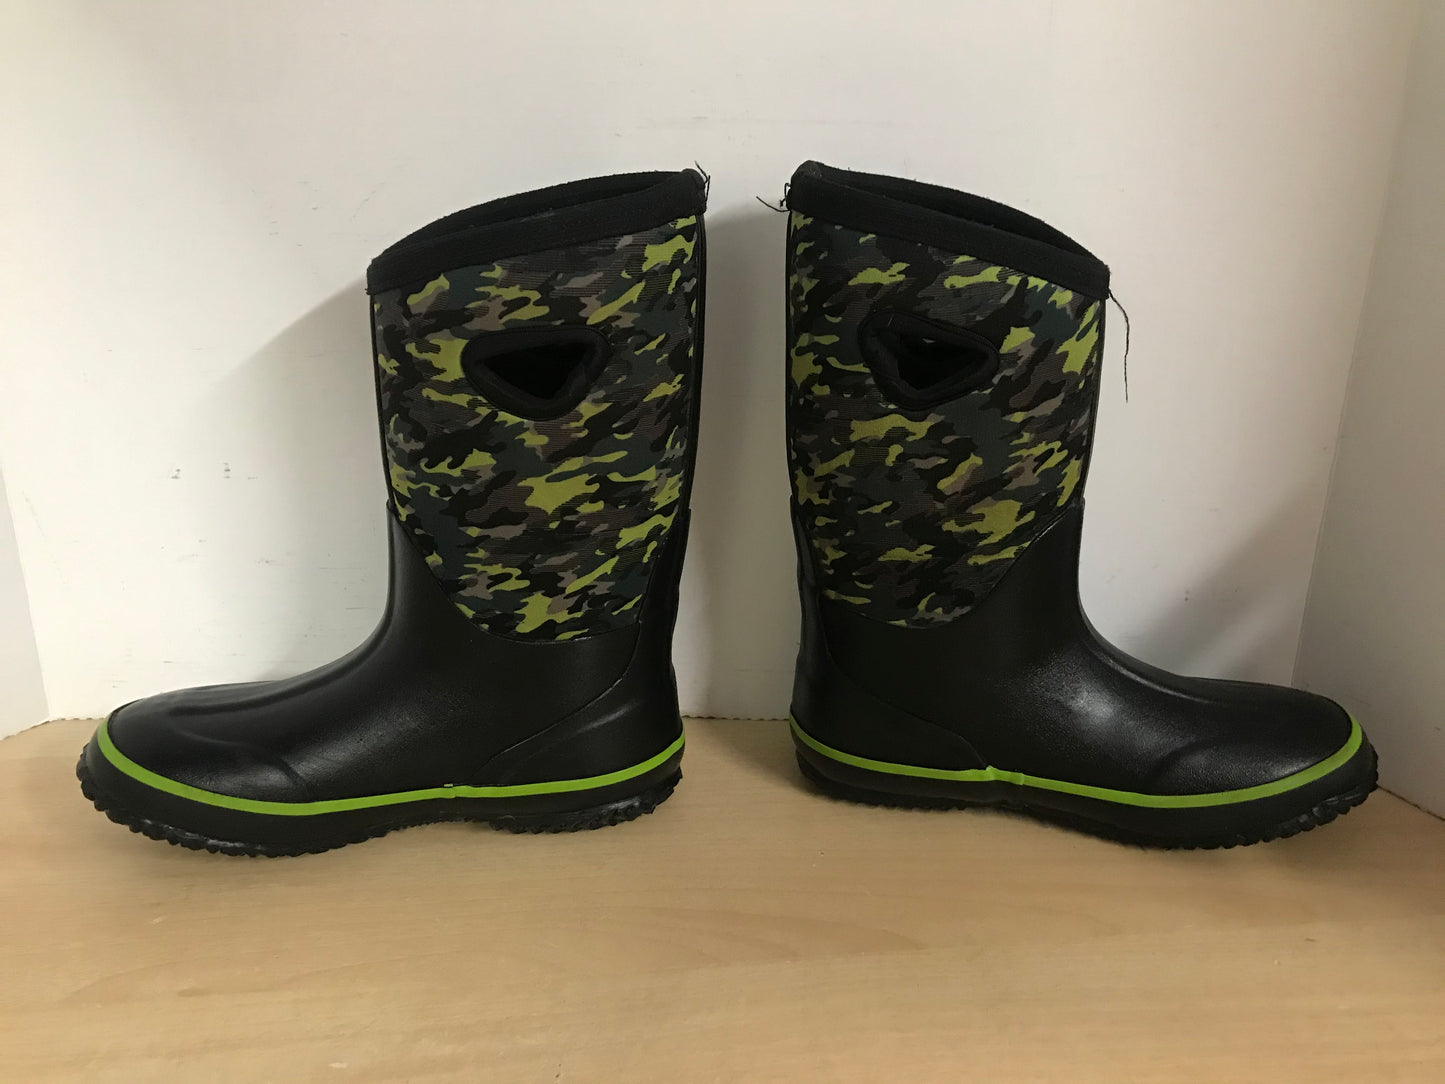 Bogs Style Child Size 3 Black Green Neoprene Rubber Rain Winter Snow Waterproof Boots Excellent